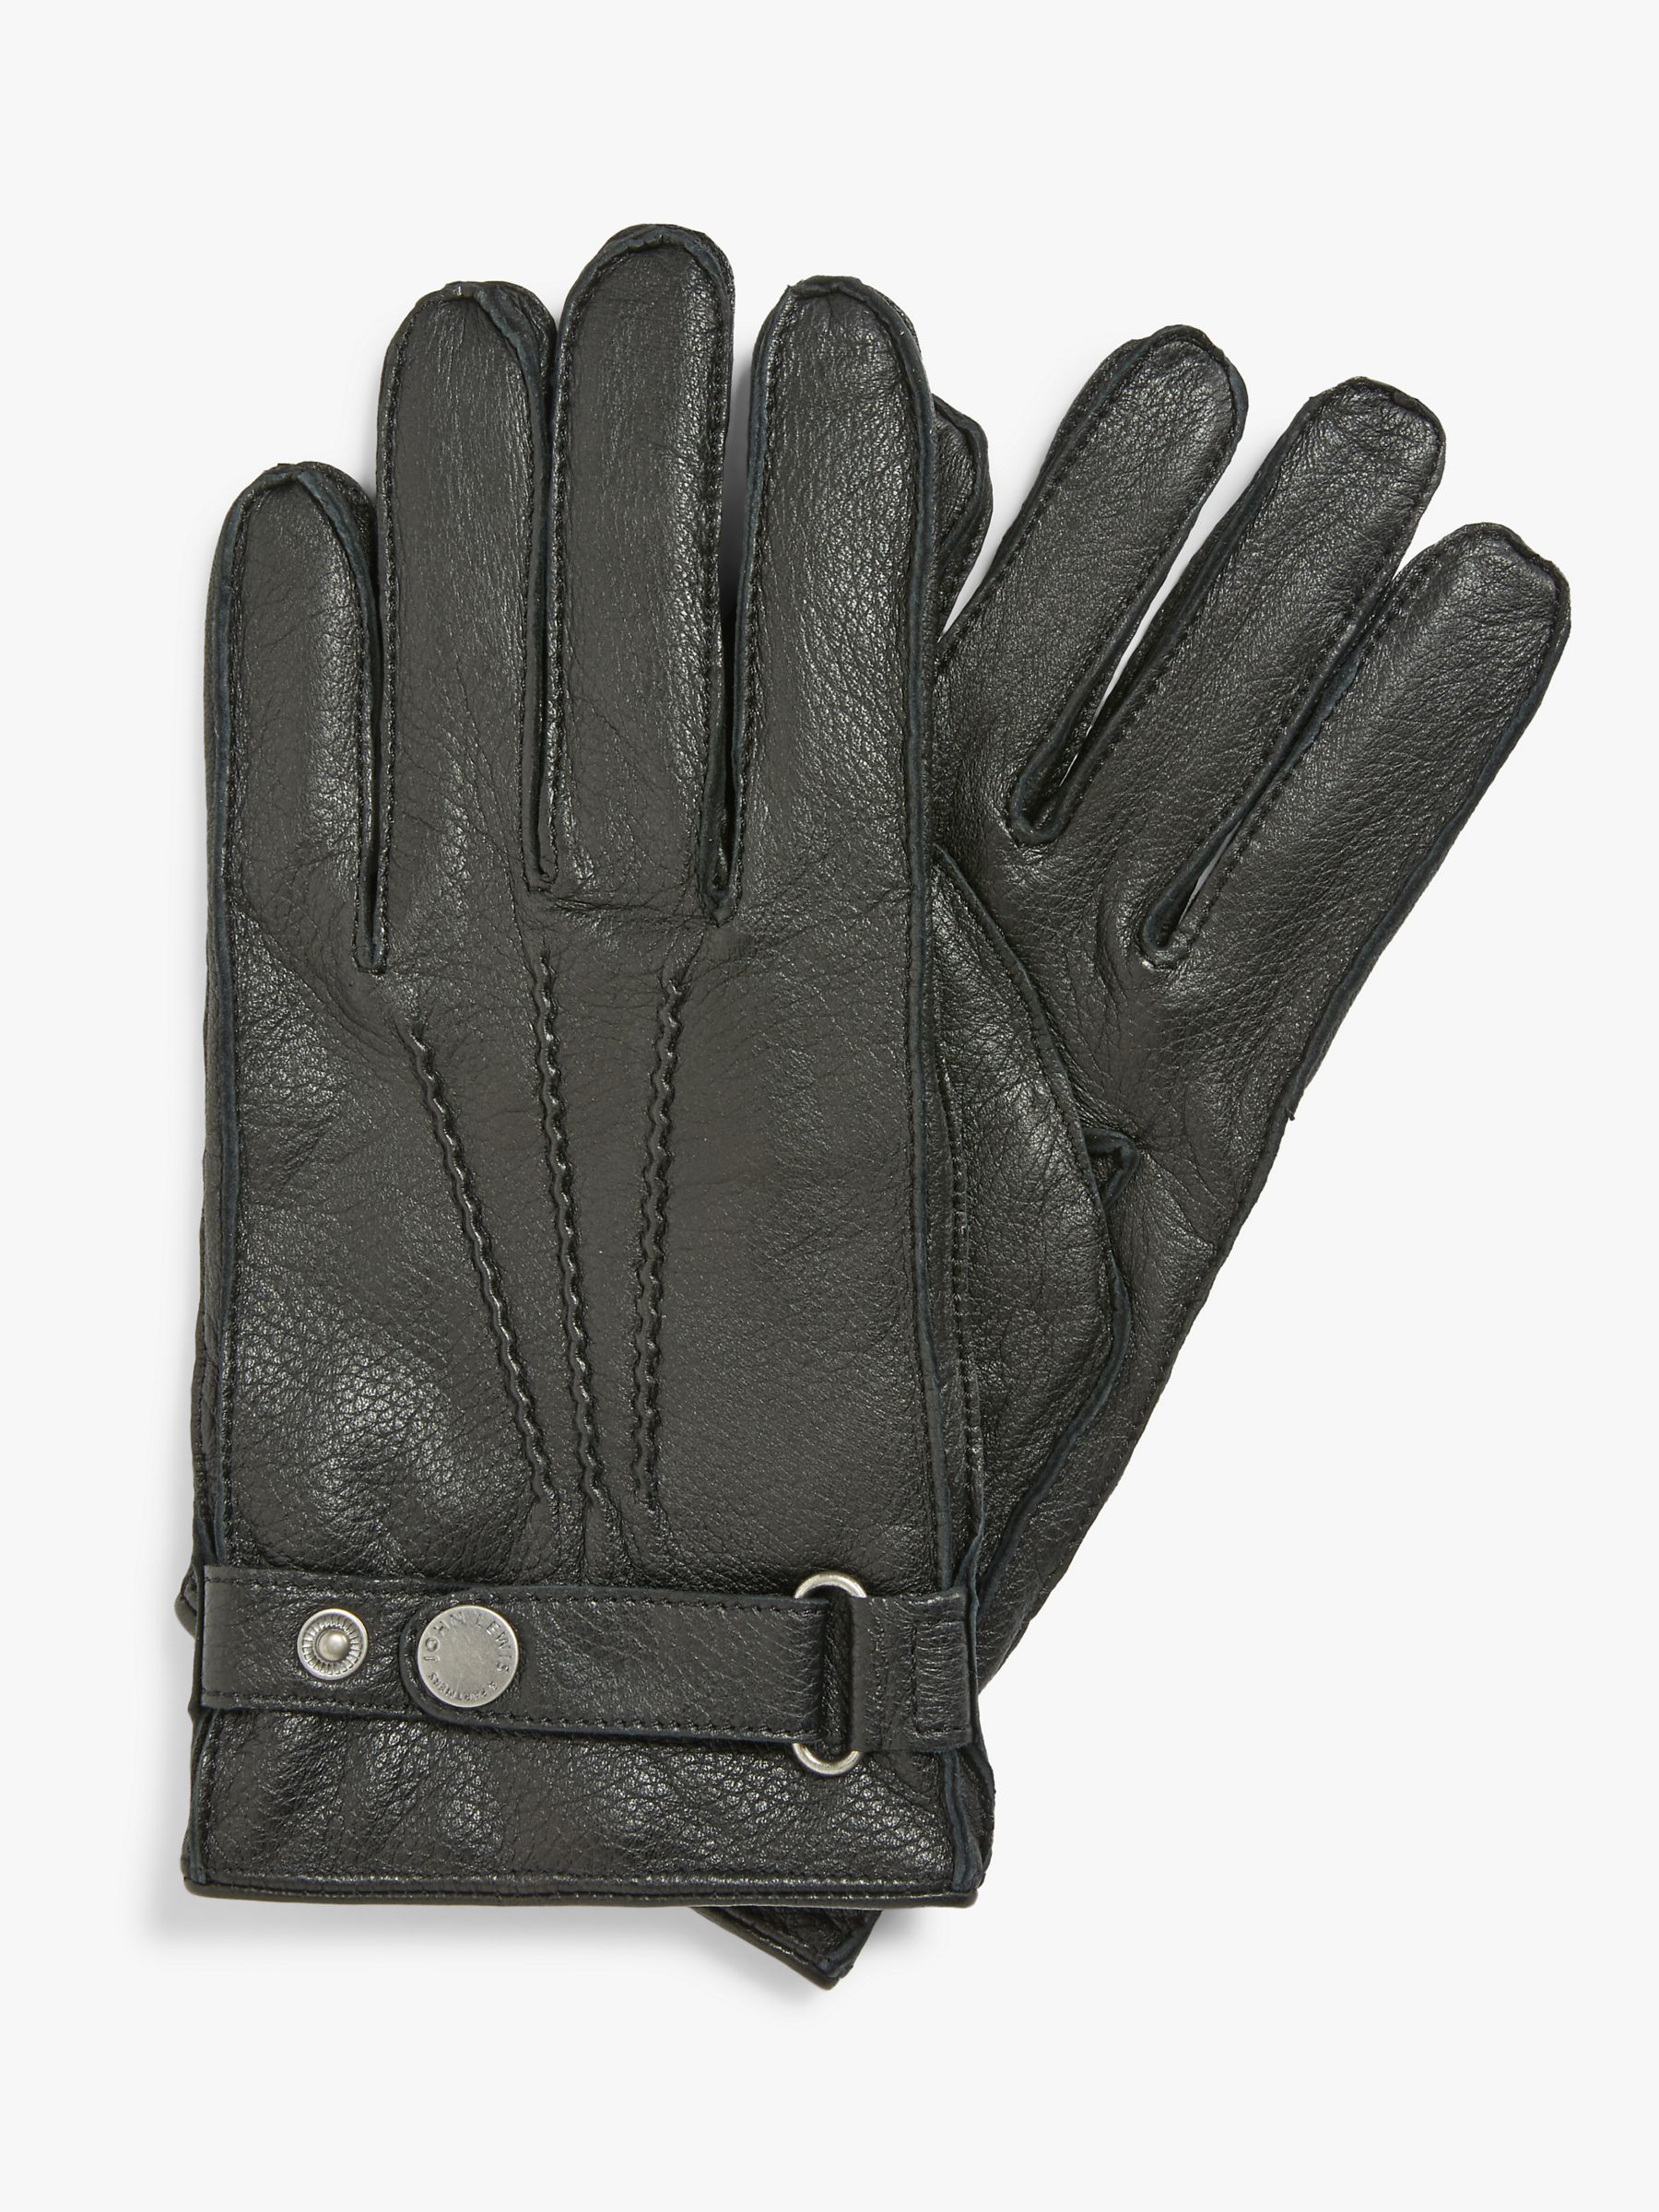 John Lewis Premium Leather Gloves, Black, S